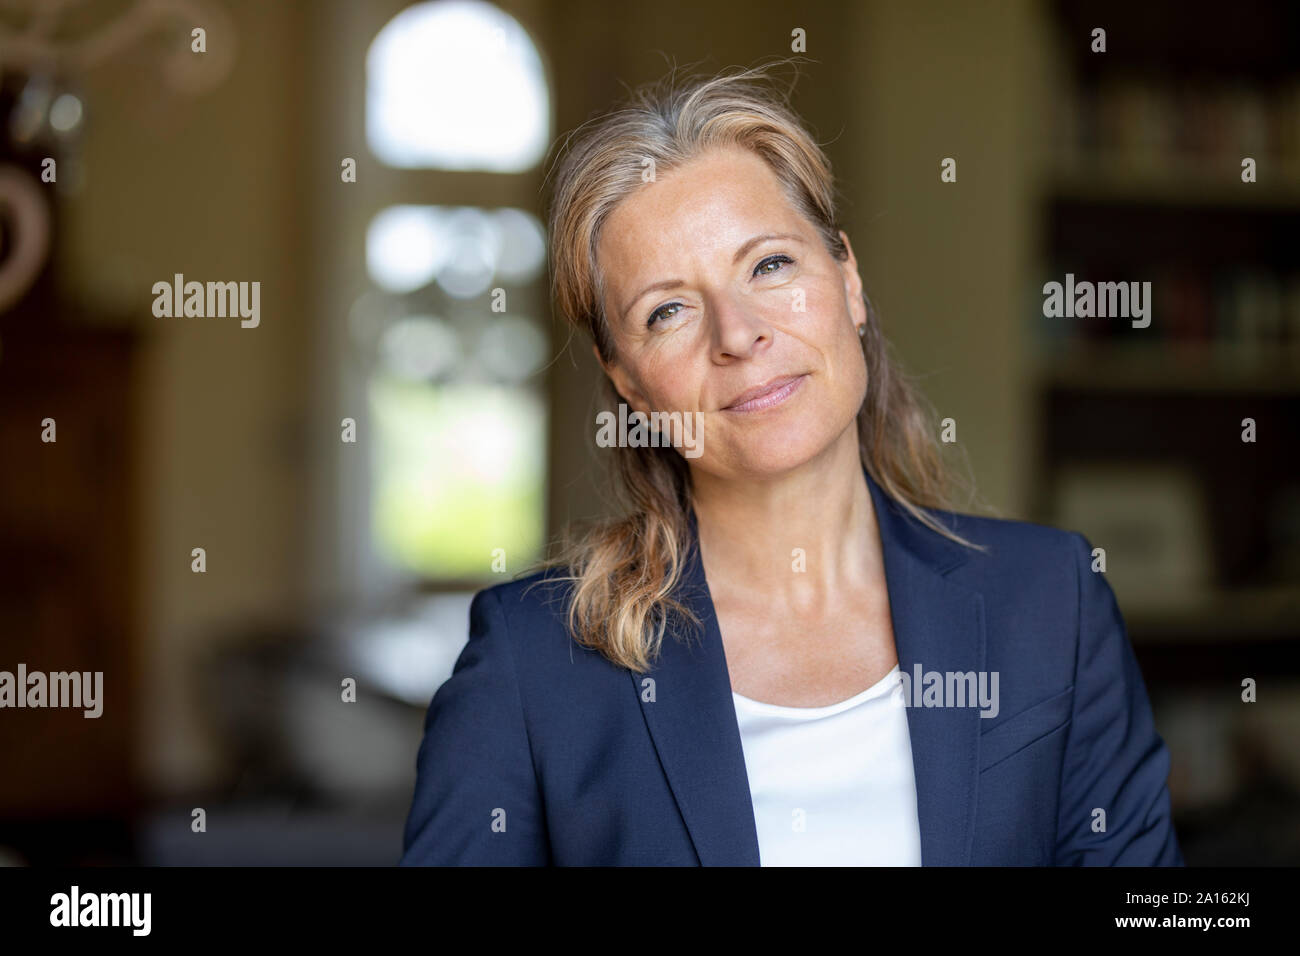 Portrait of mature businesswoman Stock Photo